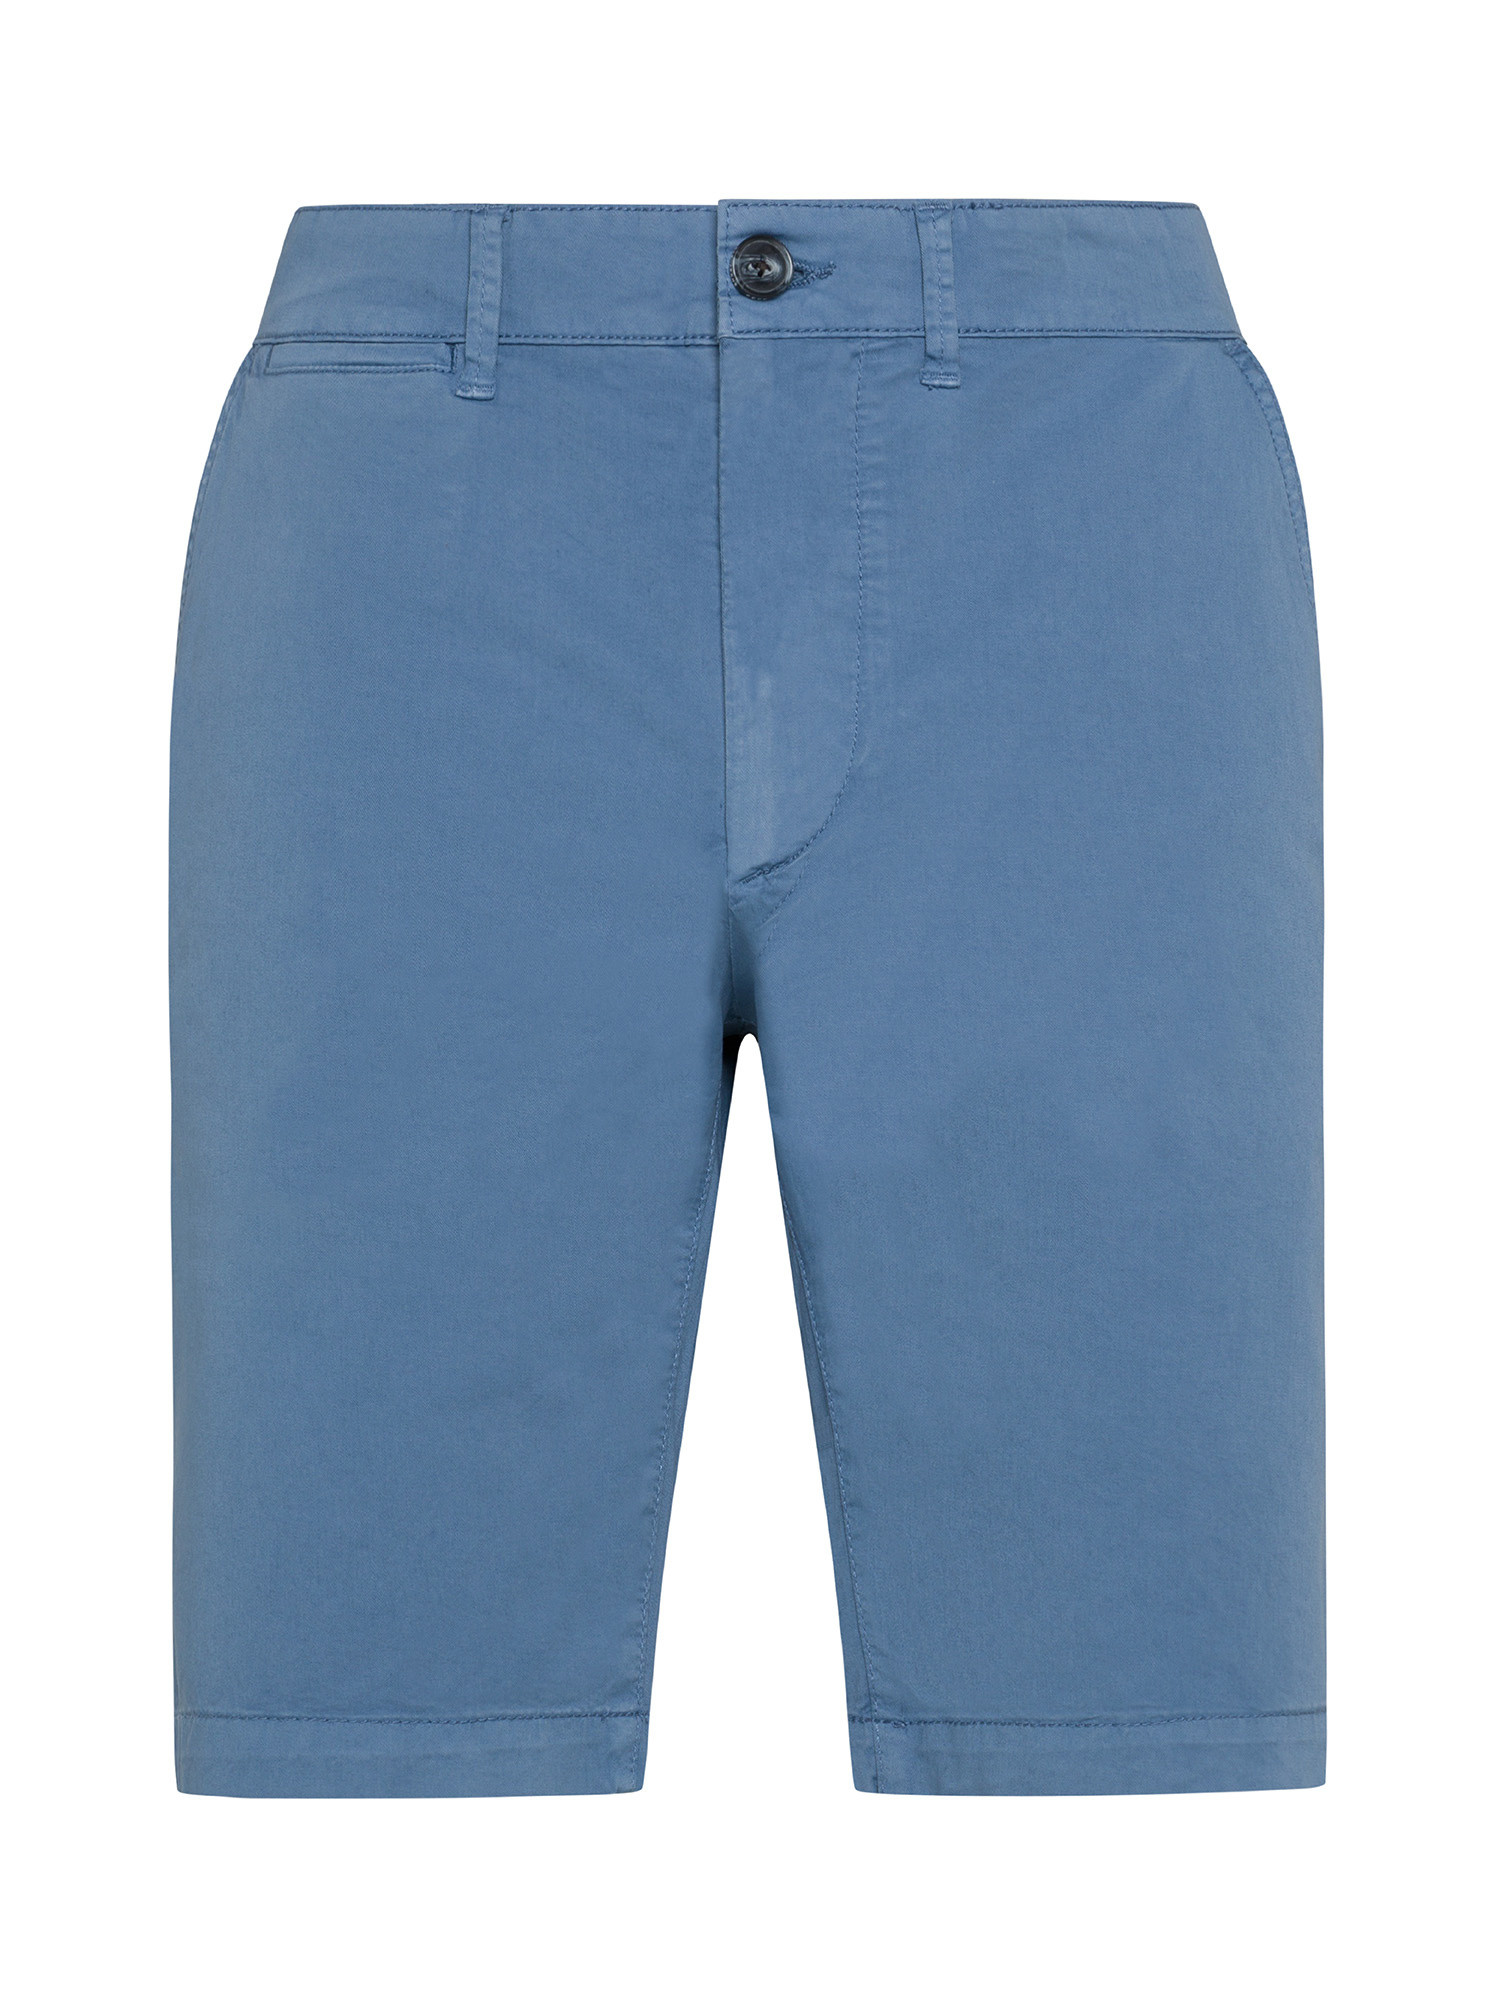 Pepe Jeans - Bermuda in cotone elasticizzato, Bianco, large image number 0